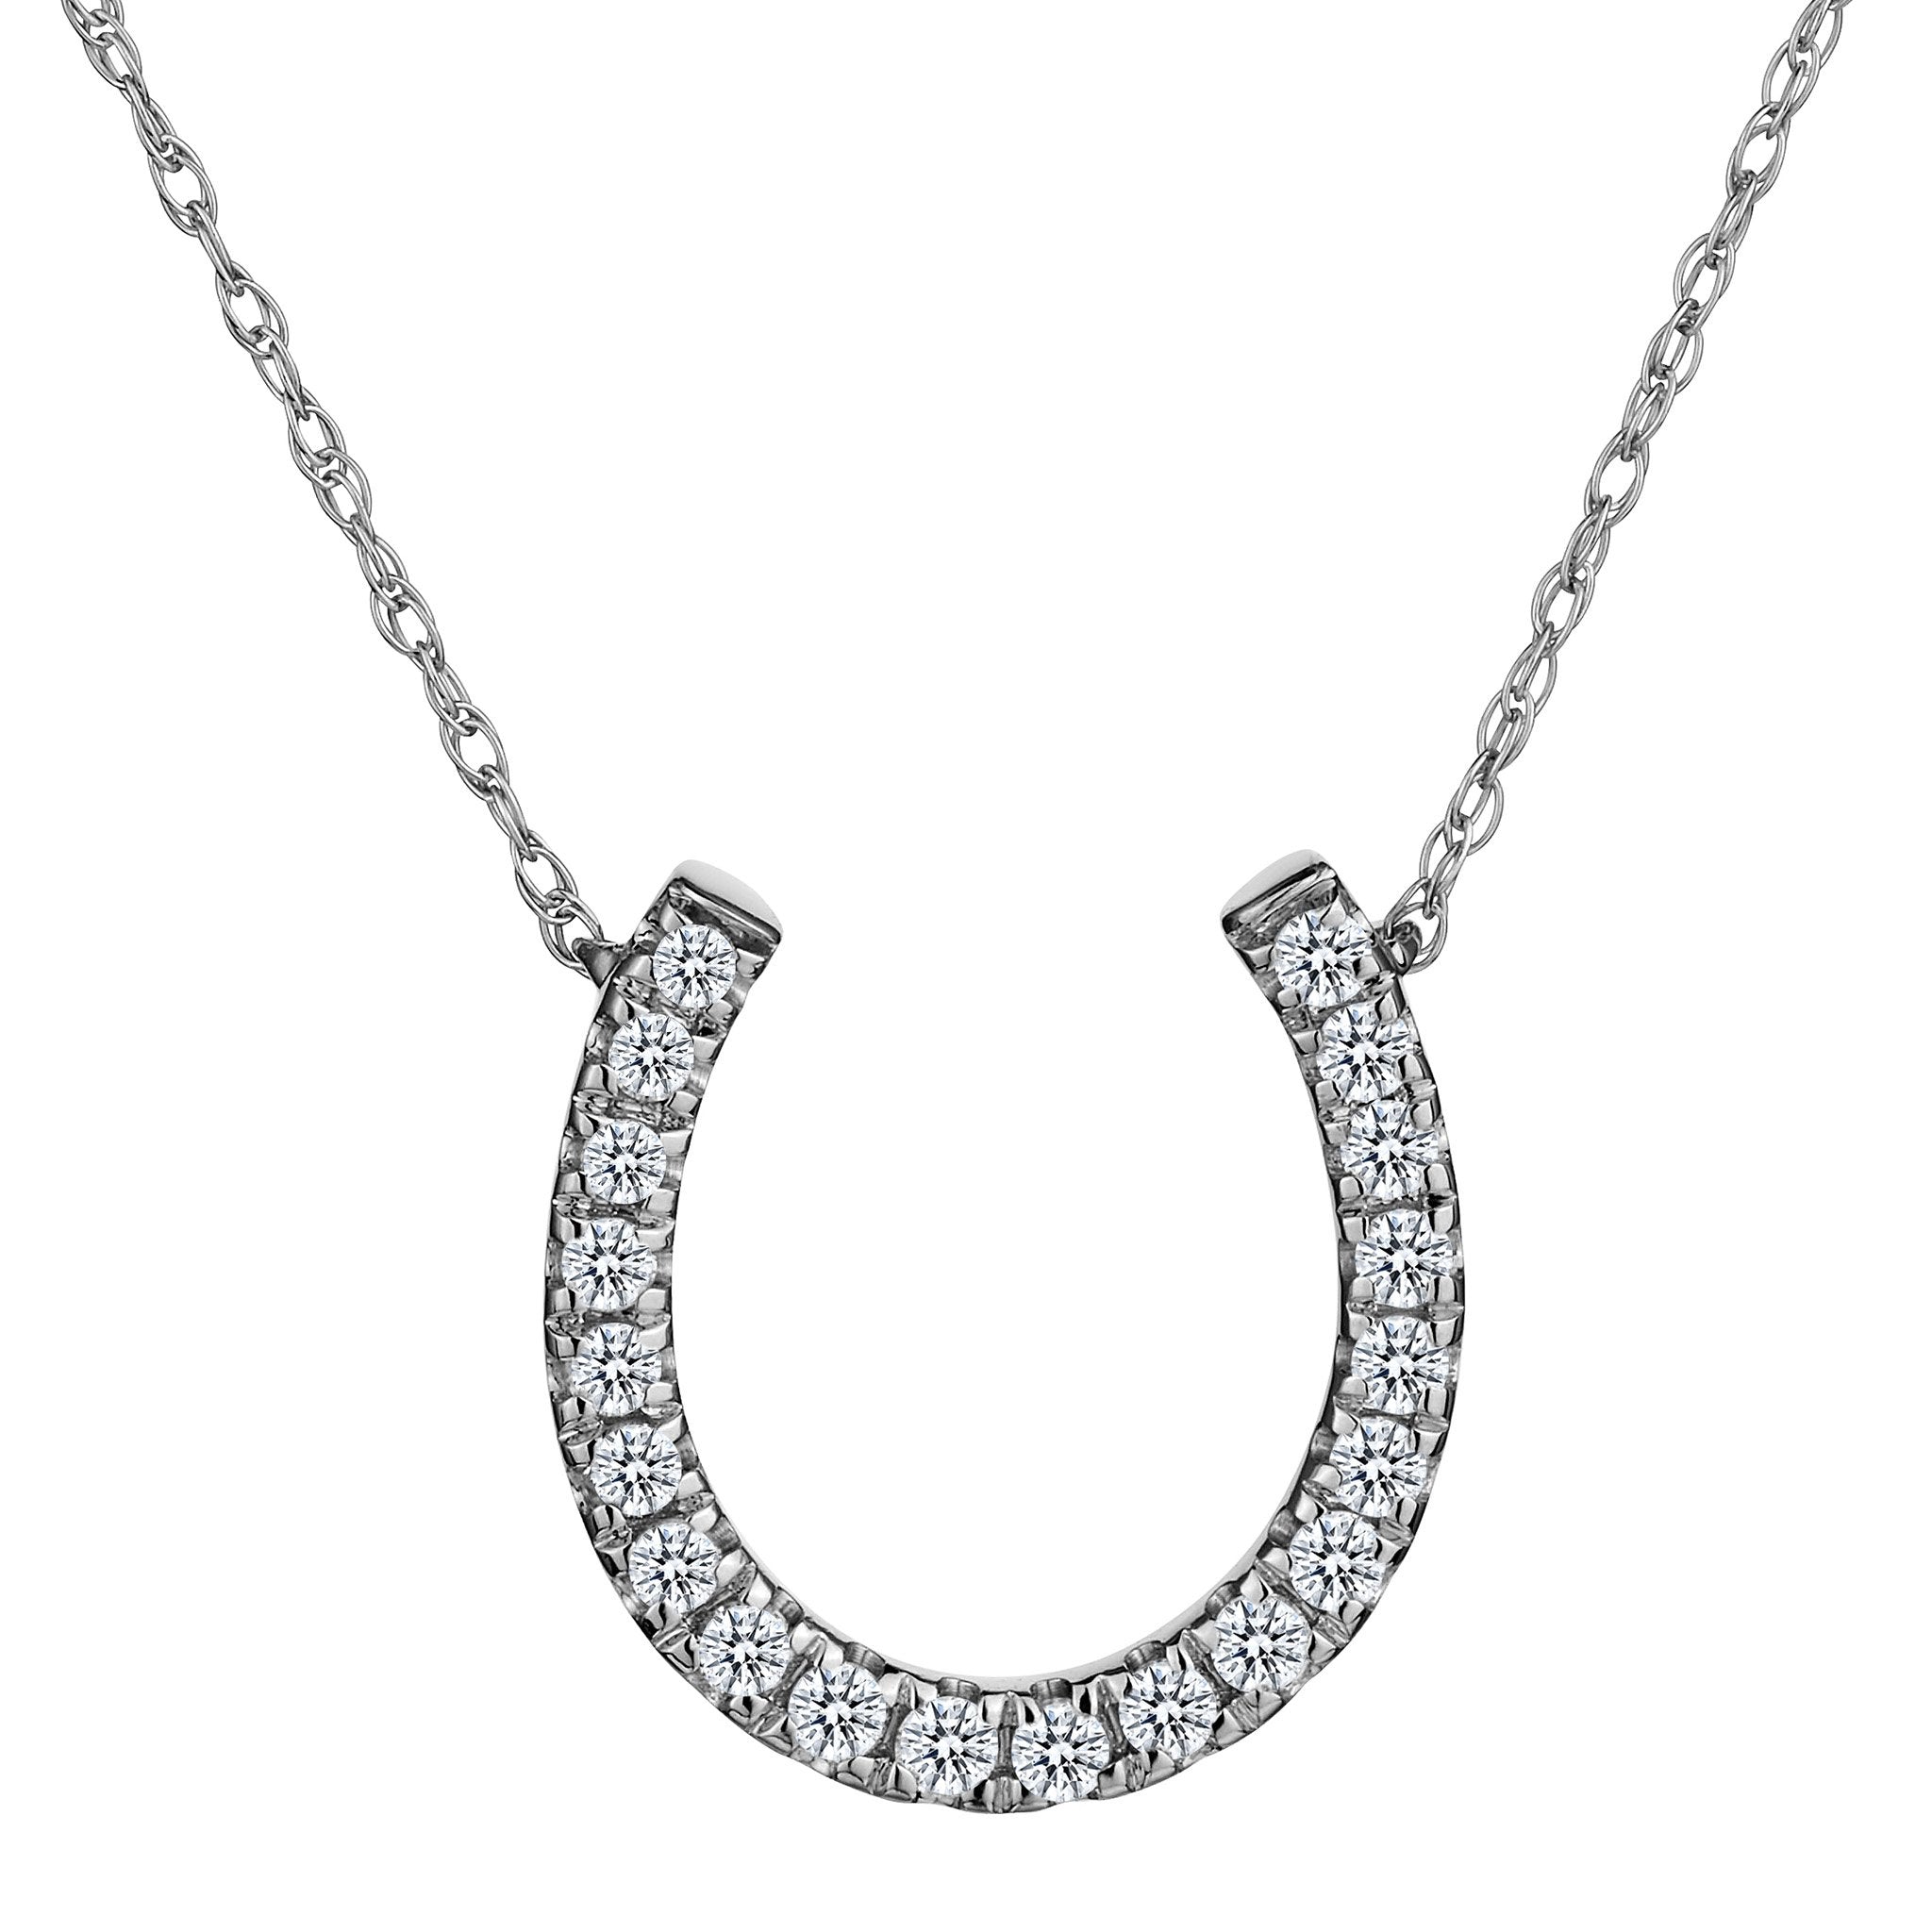 .20 Carat Diamond "Horse Shoe" Pendant Necklace,  10kt White Gold. Necklaces and Pendants. Griffin Jewellery Designs.